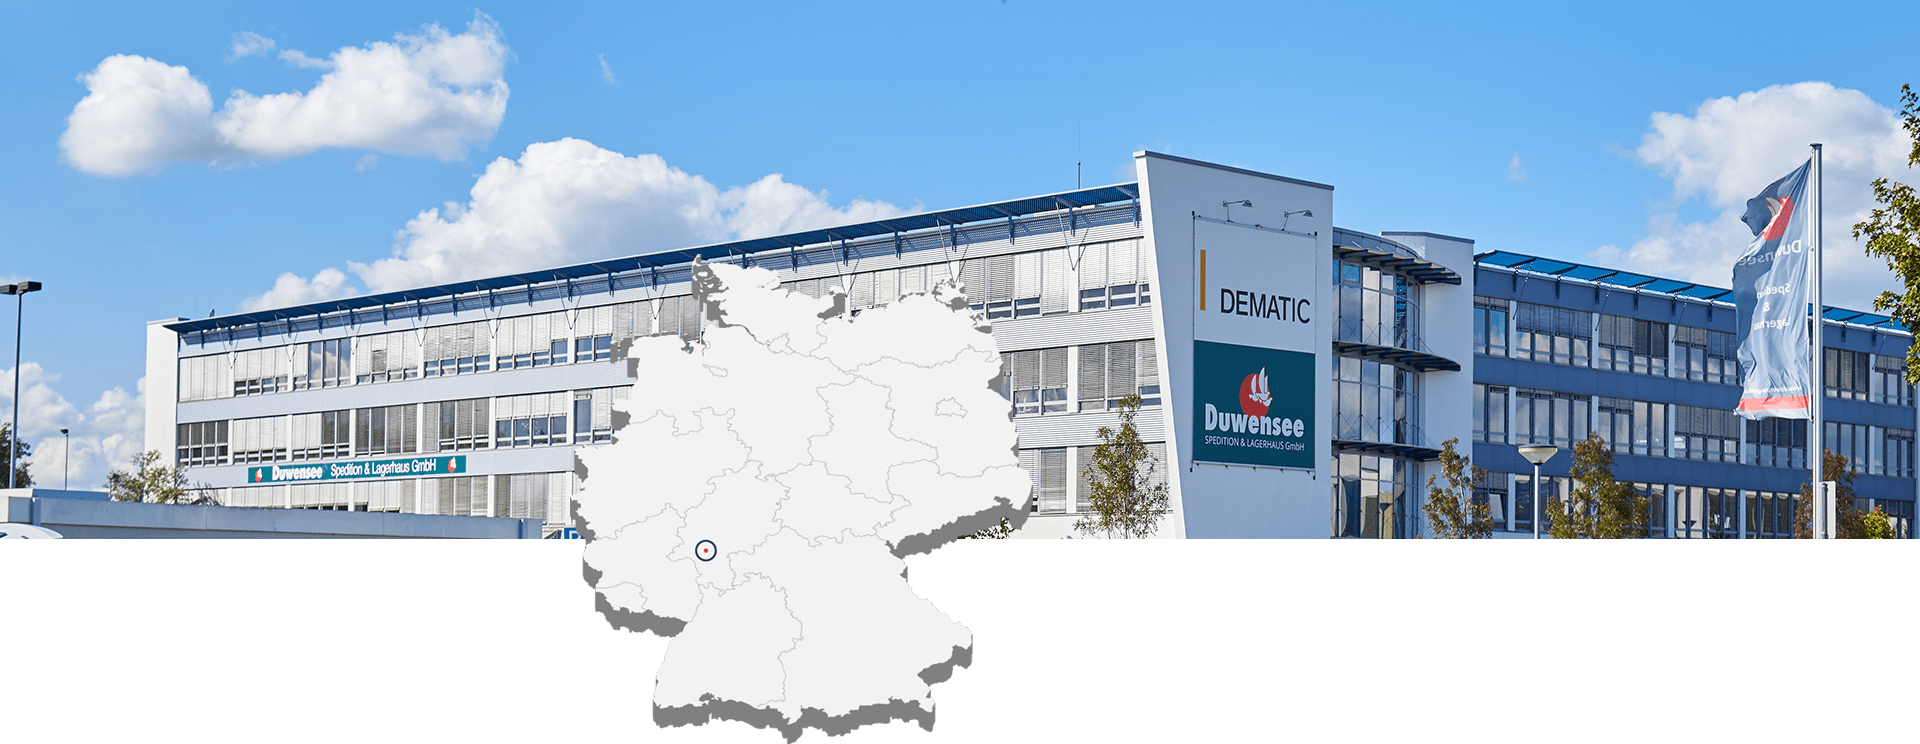 Duwensee Spedition & Lagerhaus GmbH - Contact us